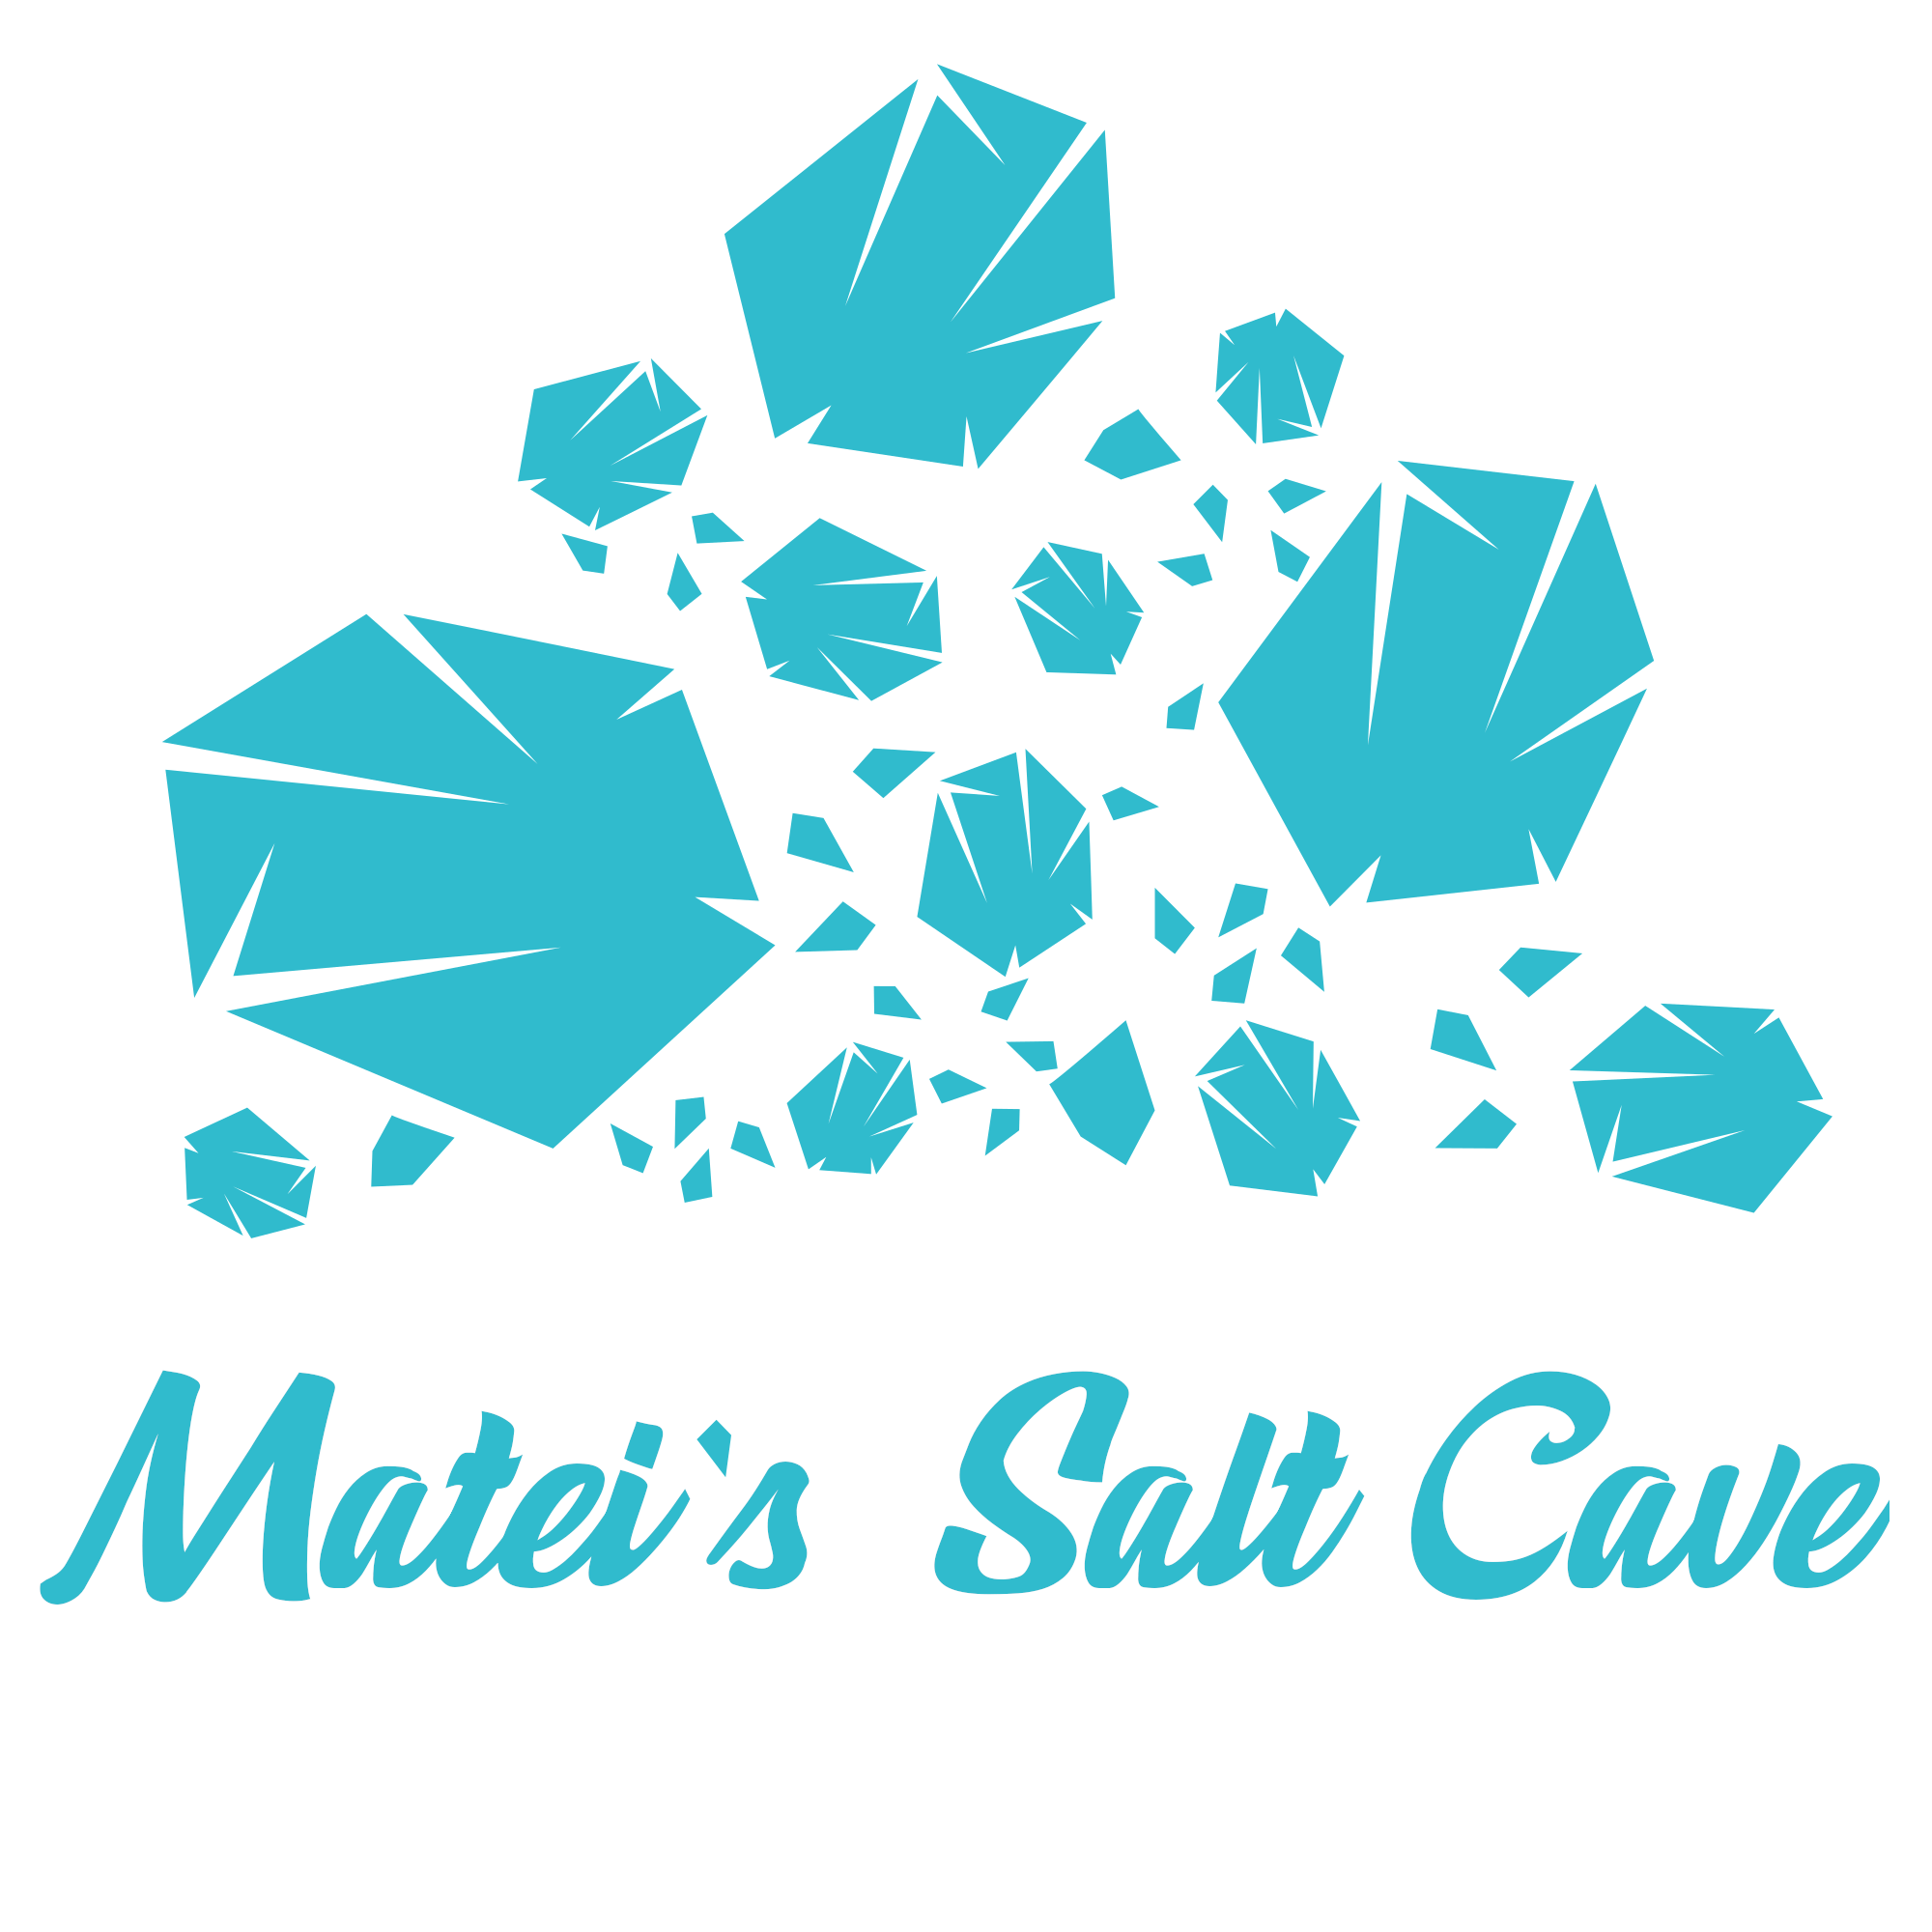 Matei's Salt Cave